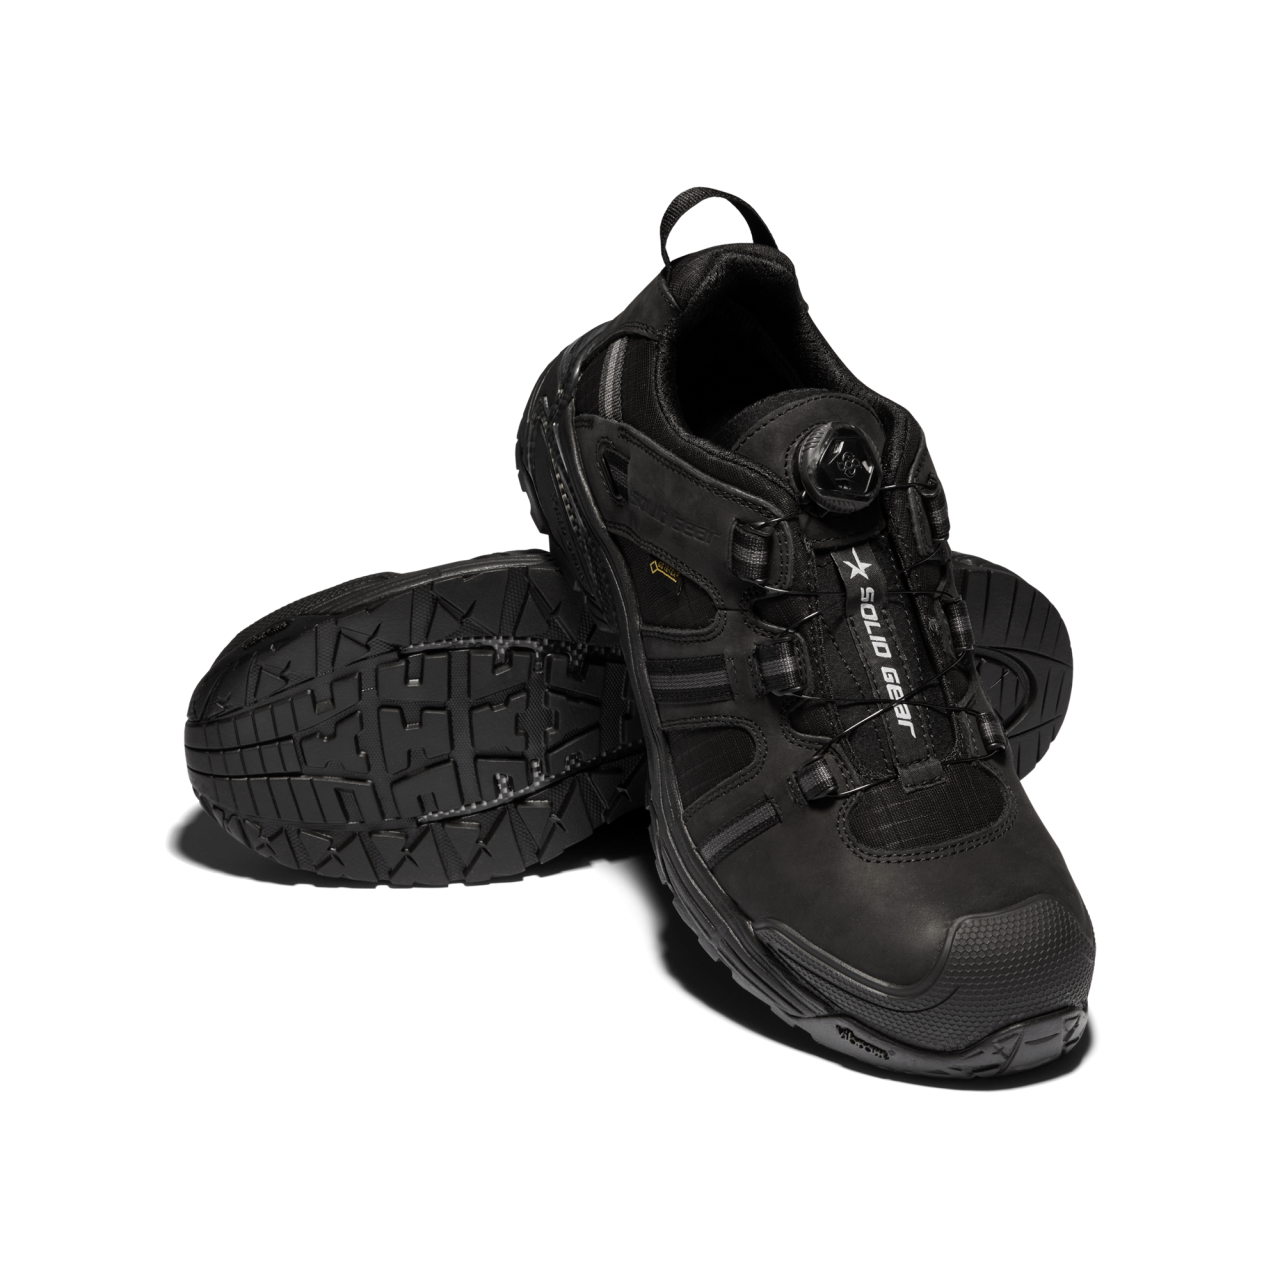 Zapato de seguridad S3 Enforcer GTX talla 48